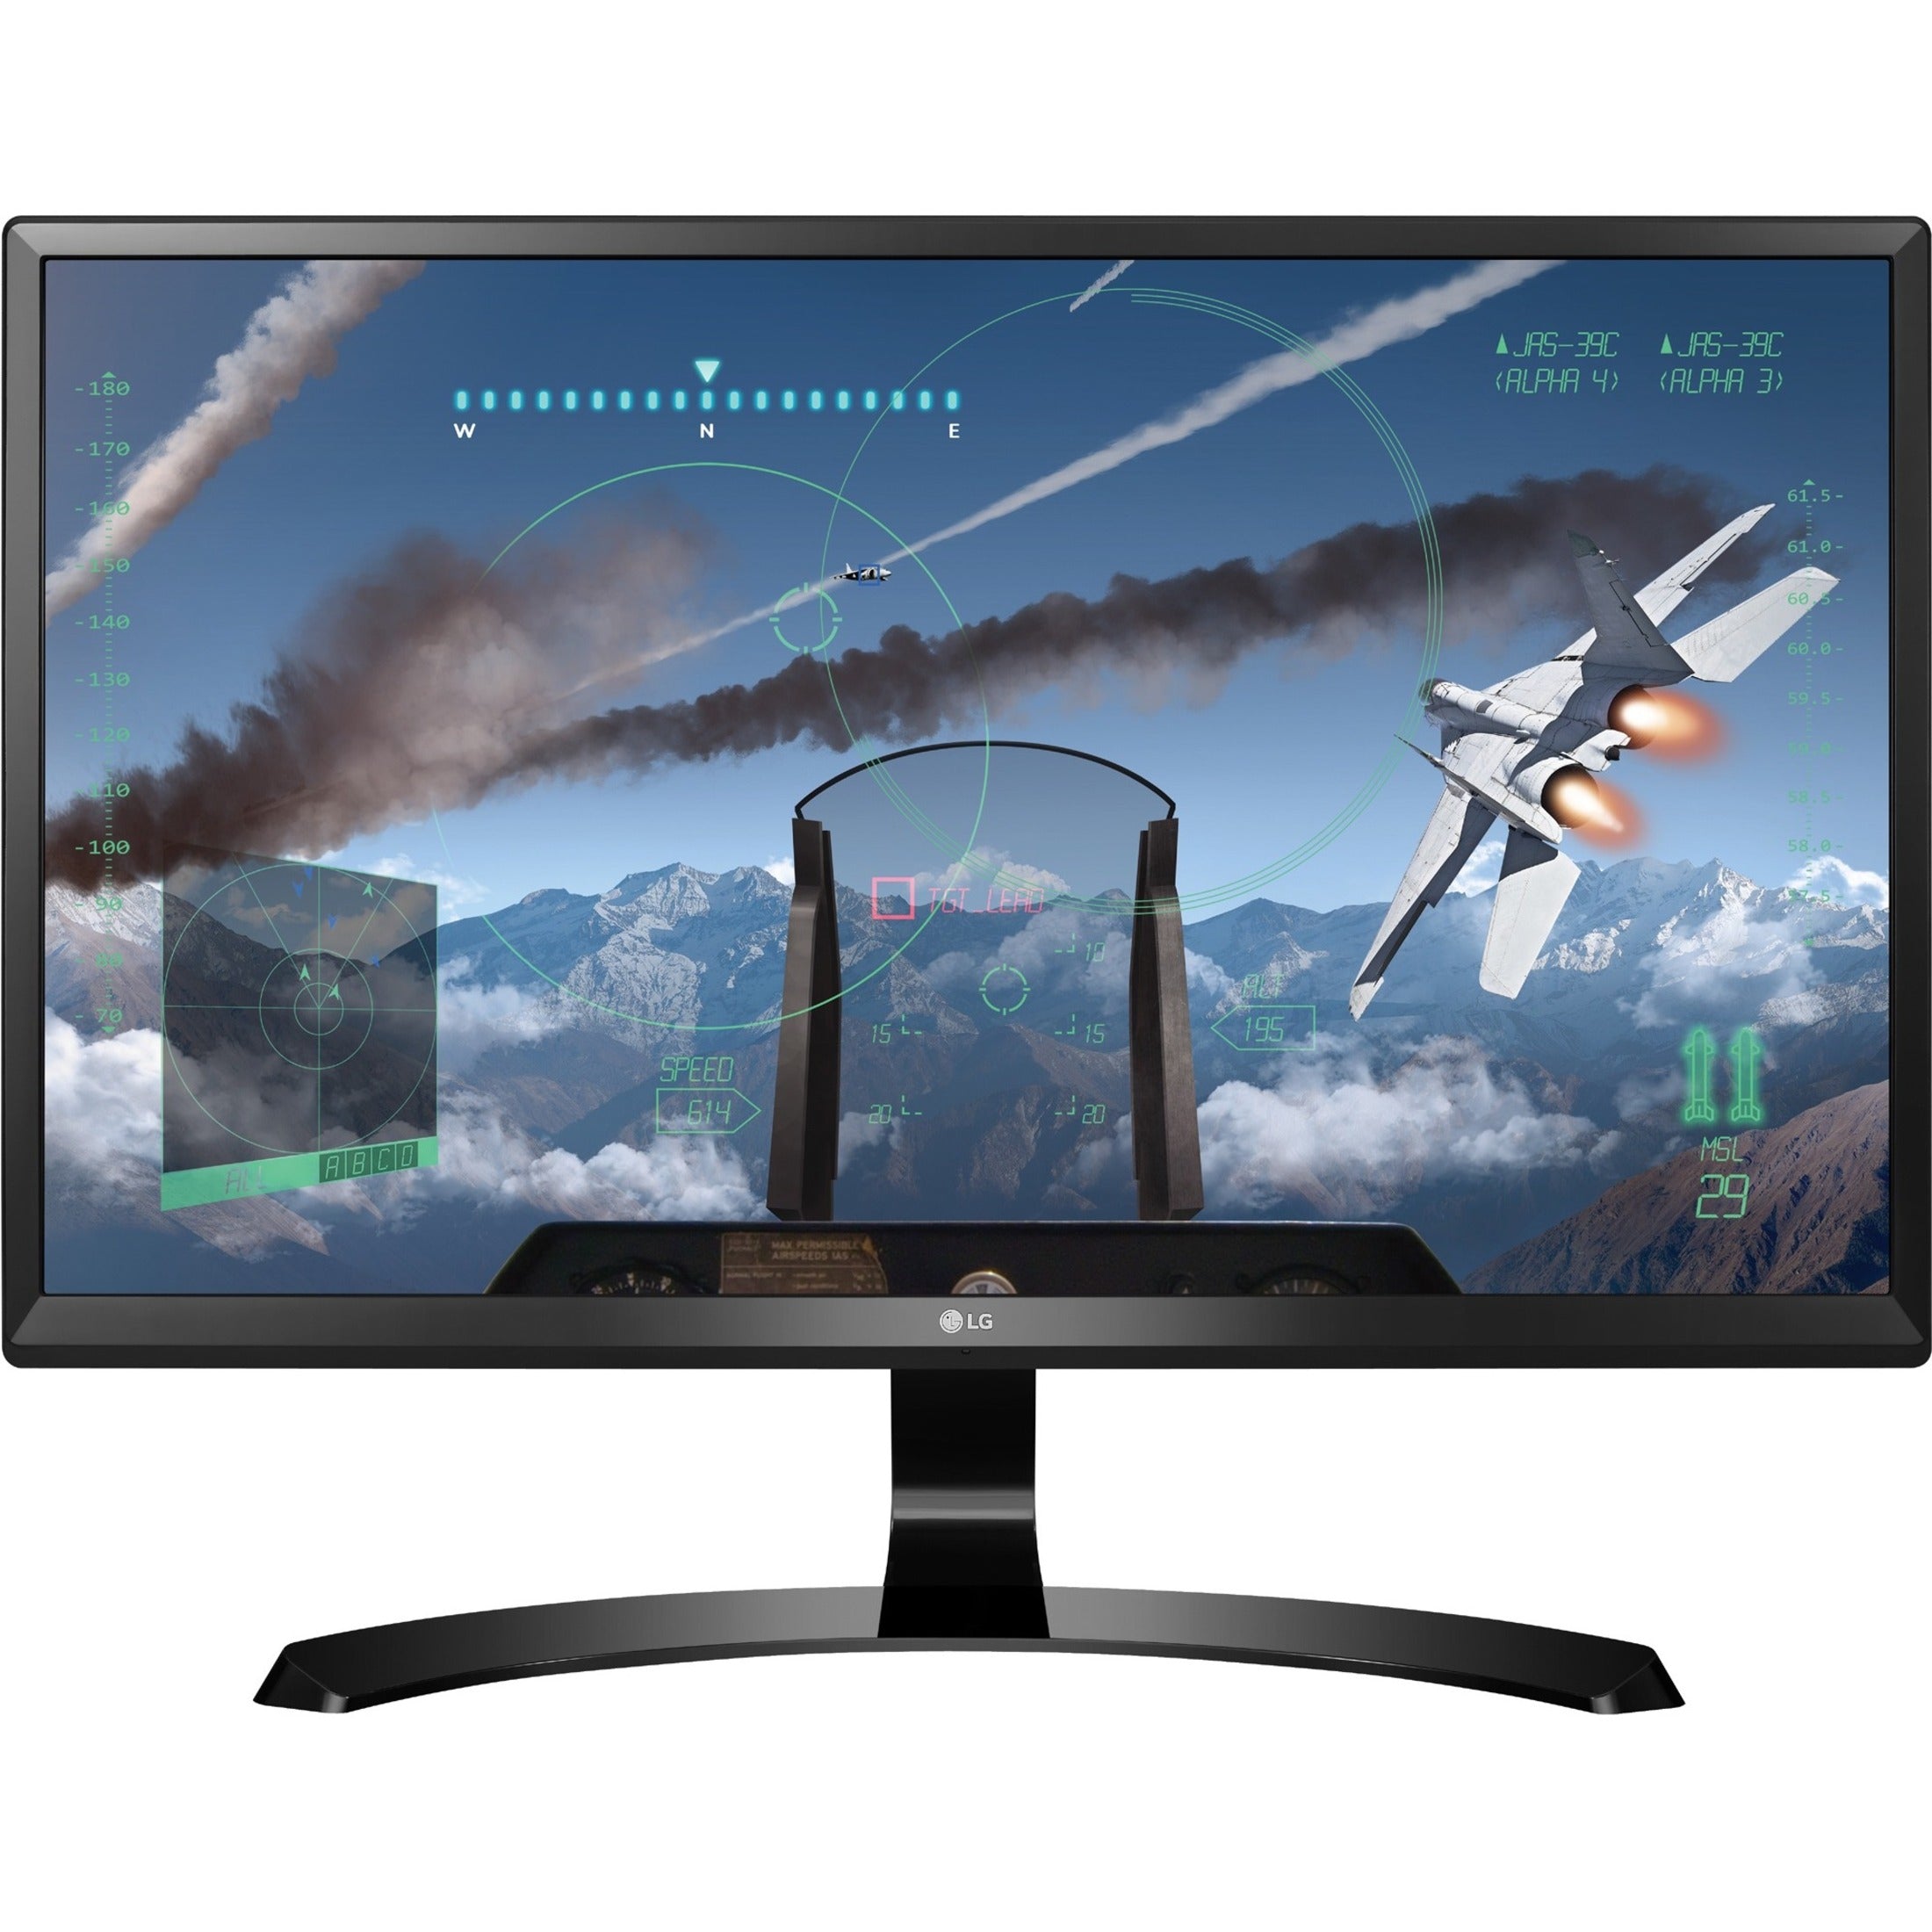 LG 24UD58-B.AUS 24UD58-B 23.8 4K UHD Gaming LCD Monitor - Immersive Gaming Experience, FreeSync Technology